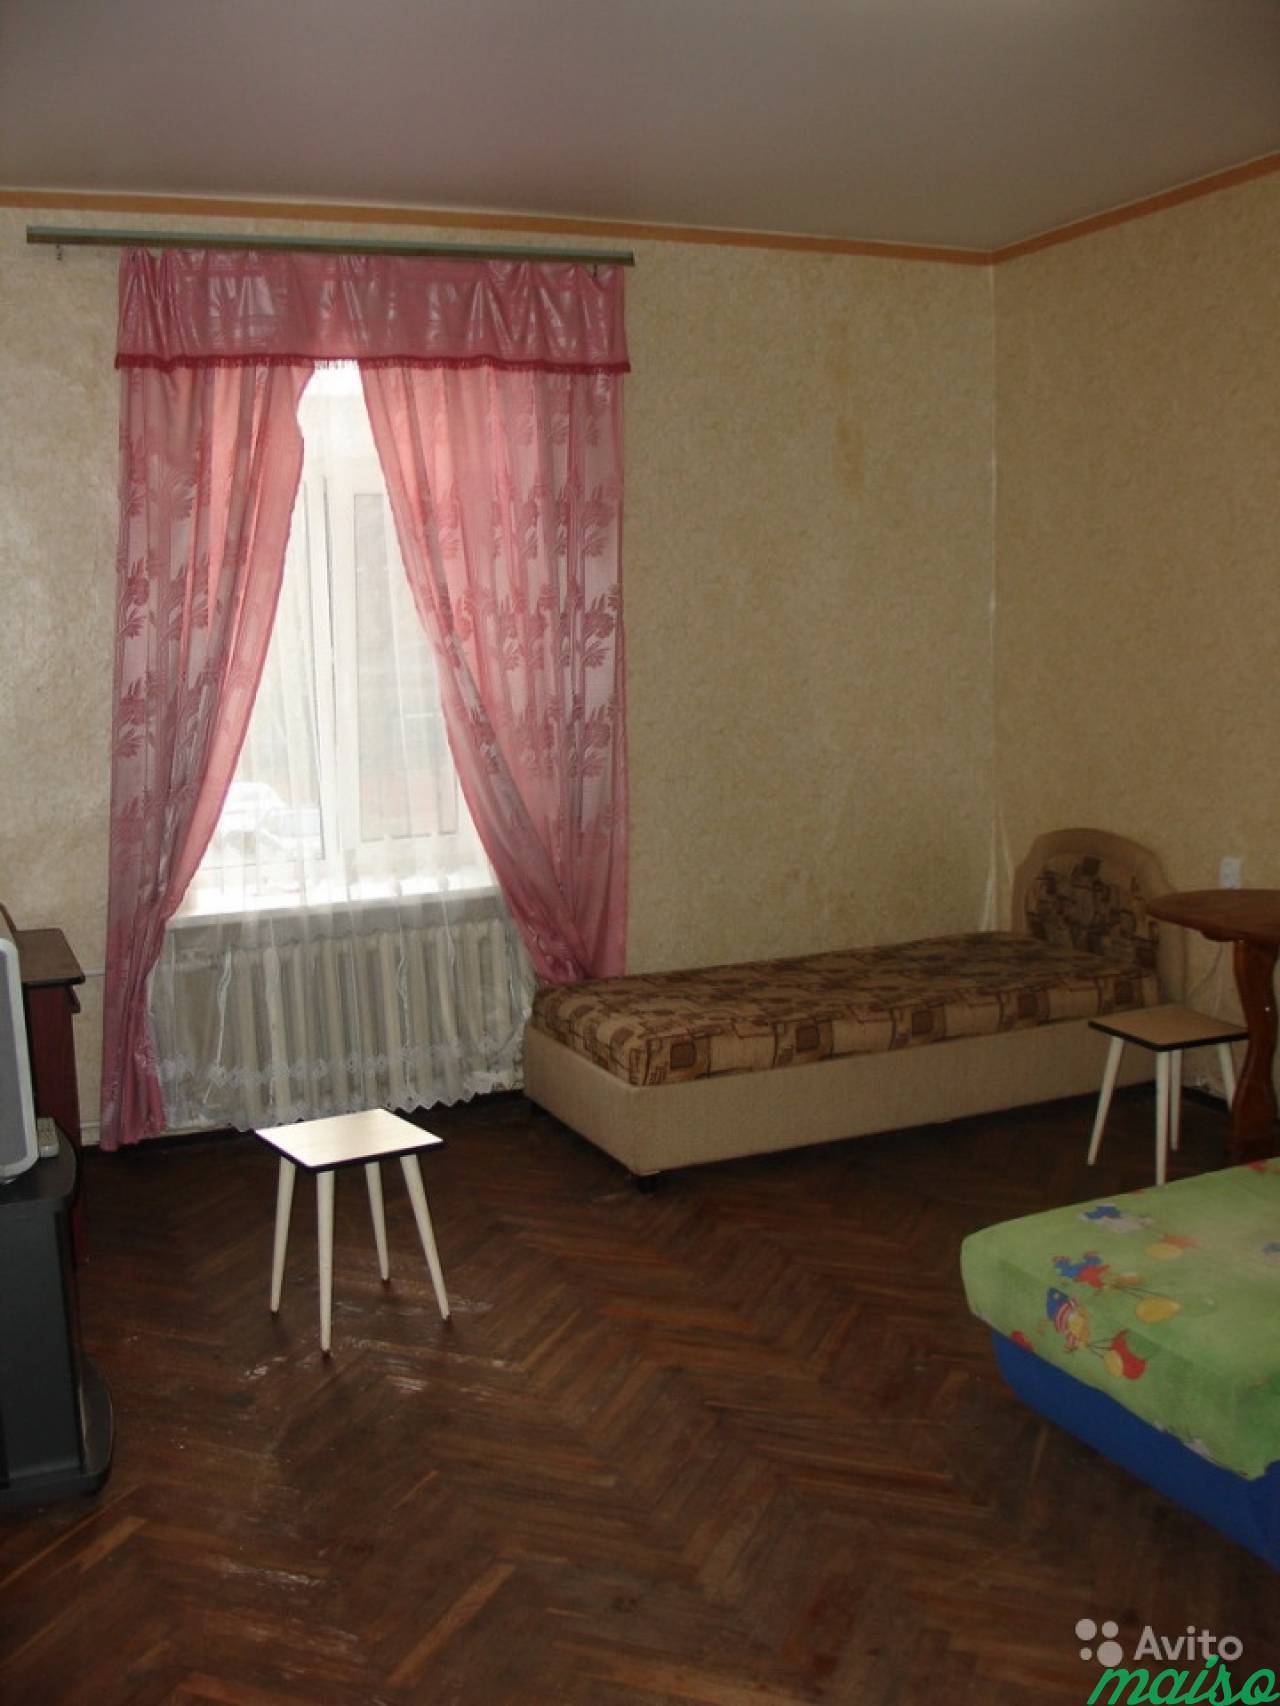 Комната 21.2 м² в 4-к, 2/3 эт. в Санкт-Петербурге. Фото 1